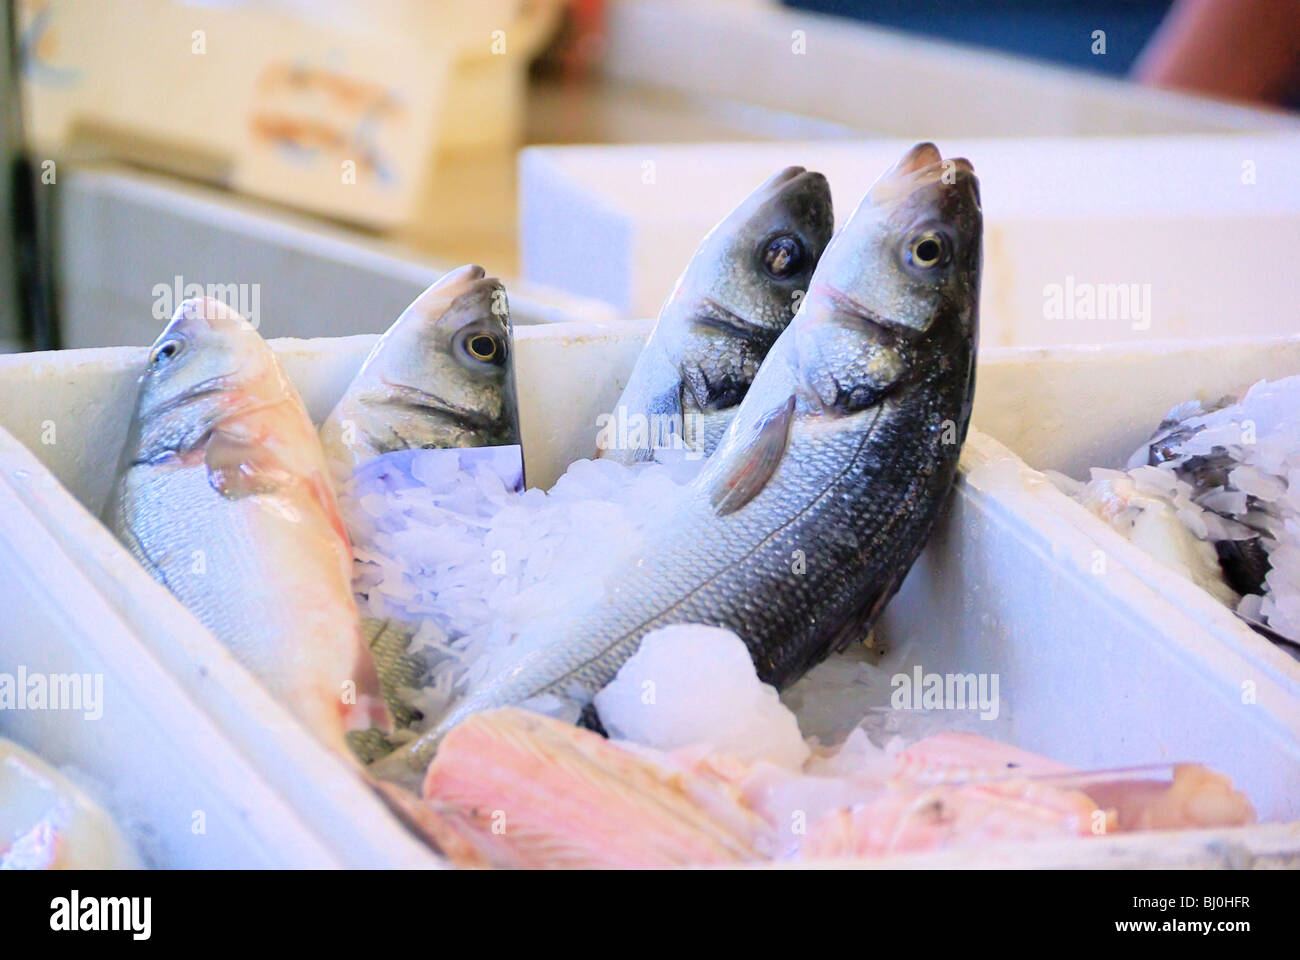 Fisch auf Eis - pesce su ghiaccio 01 Foto Stock